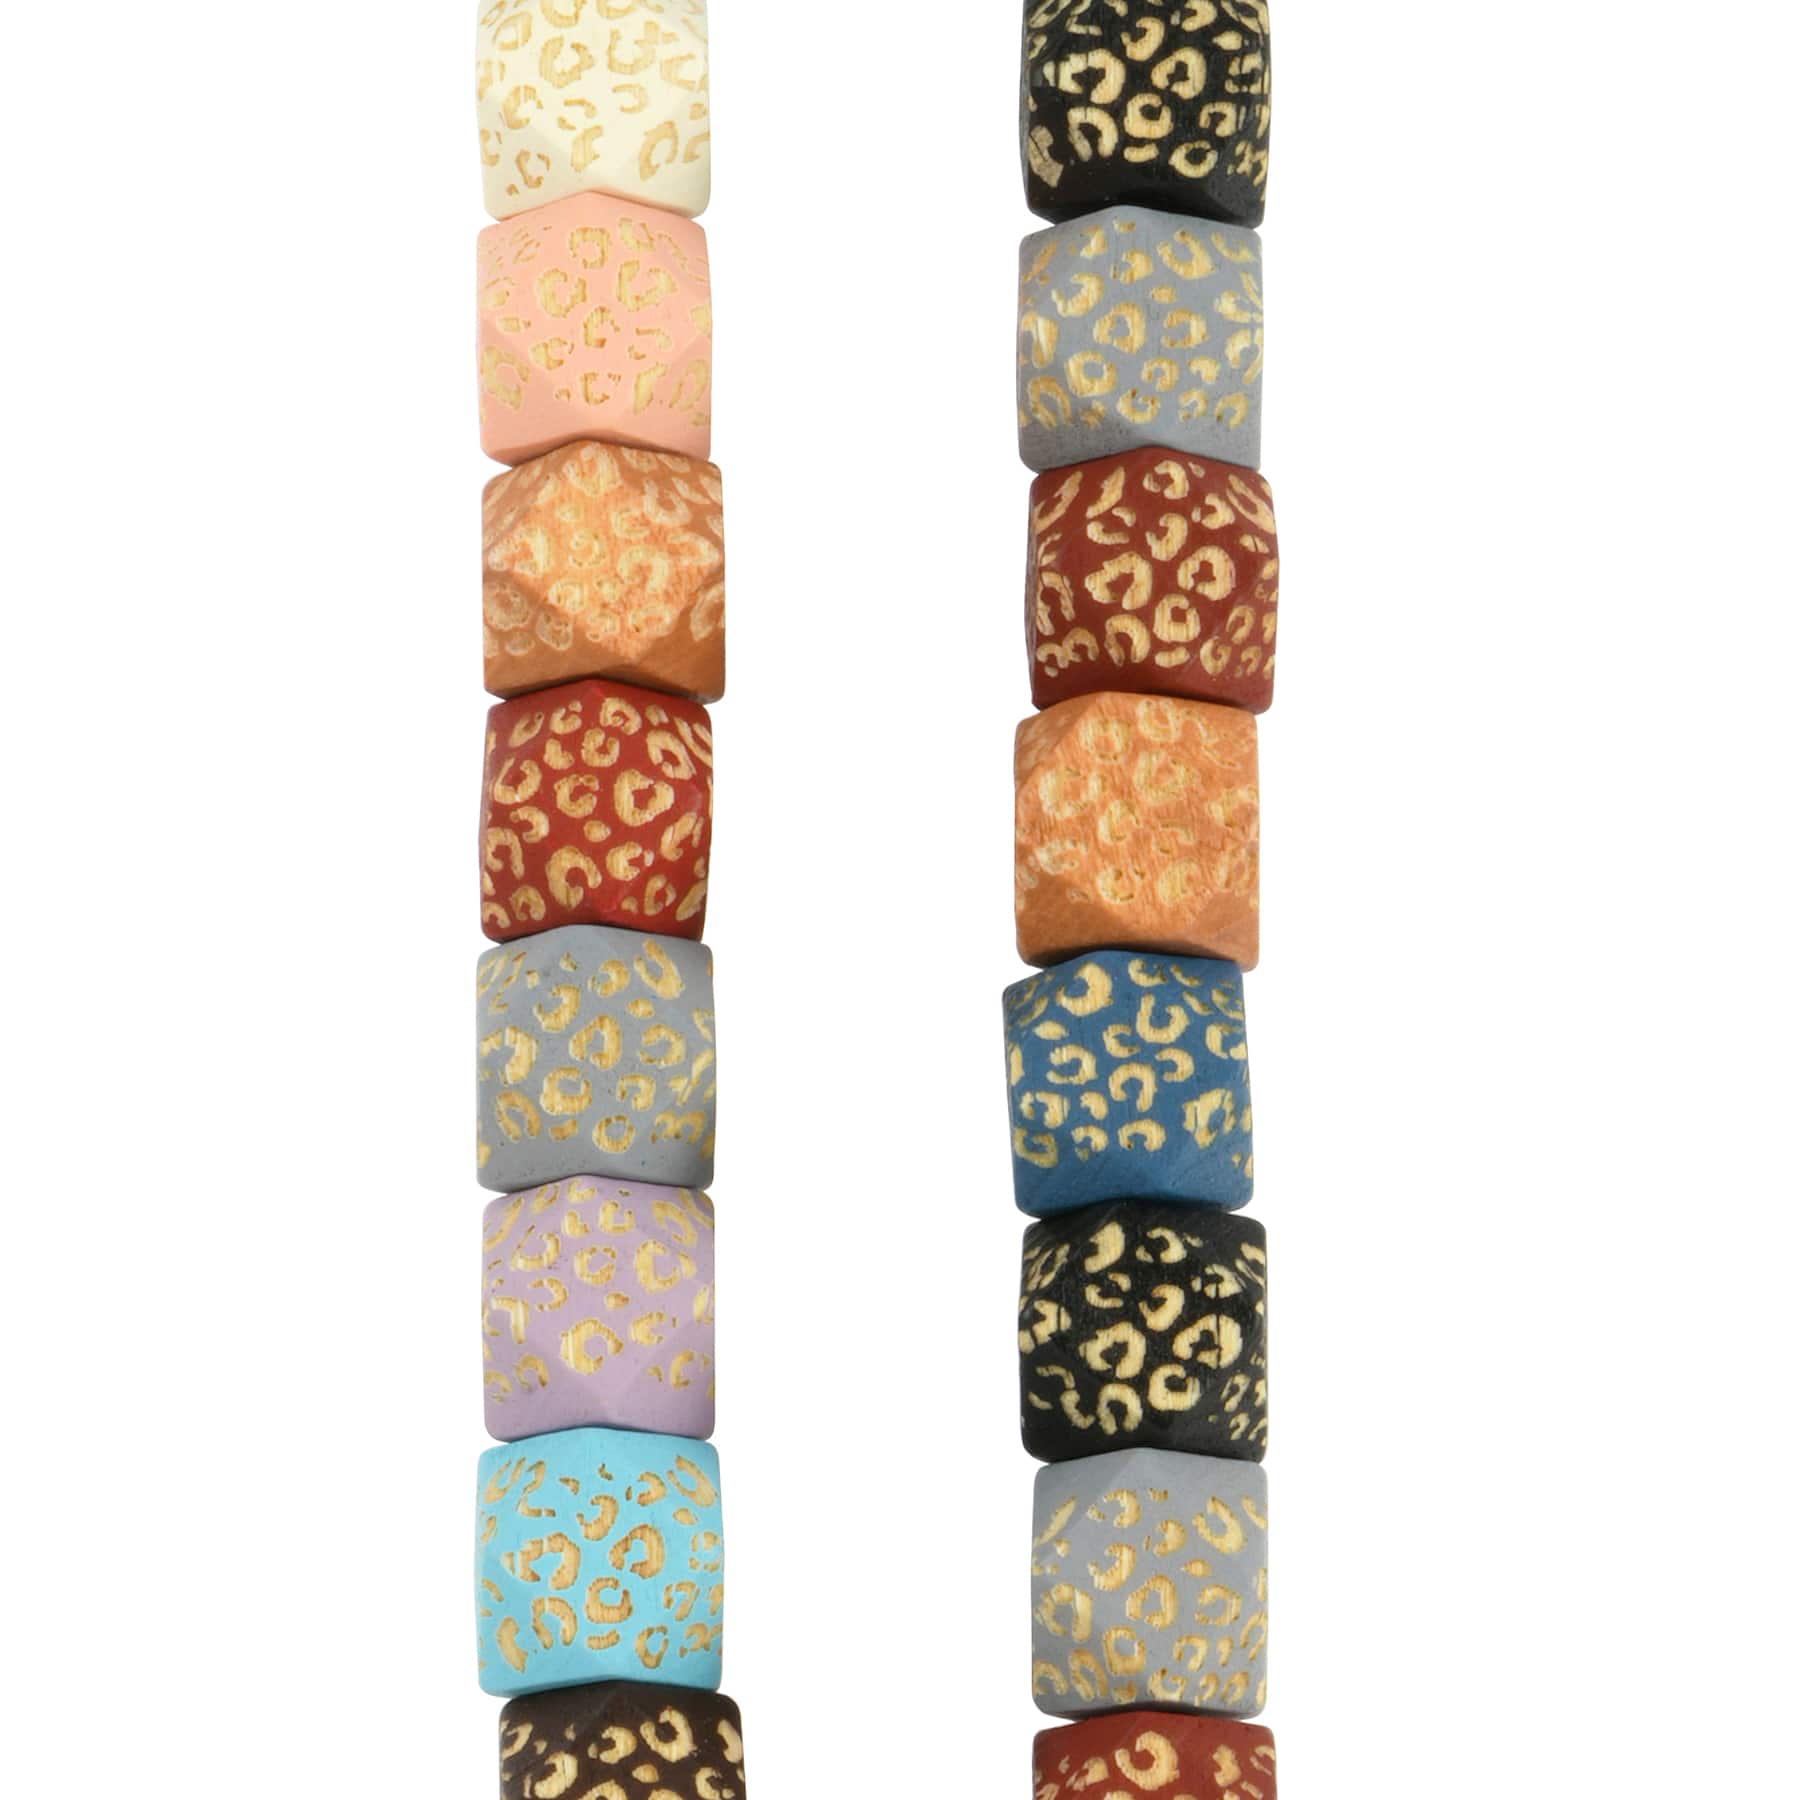 6 Packs: 30 ct. (180 total) Multicolored Cheetah Print Wood Cube Beads, 12.5mm by Bead Landing&#x2122;